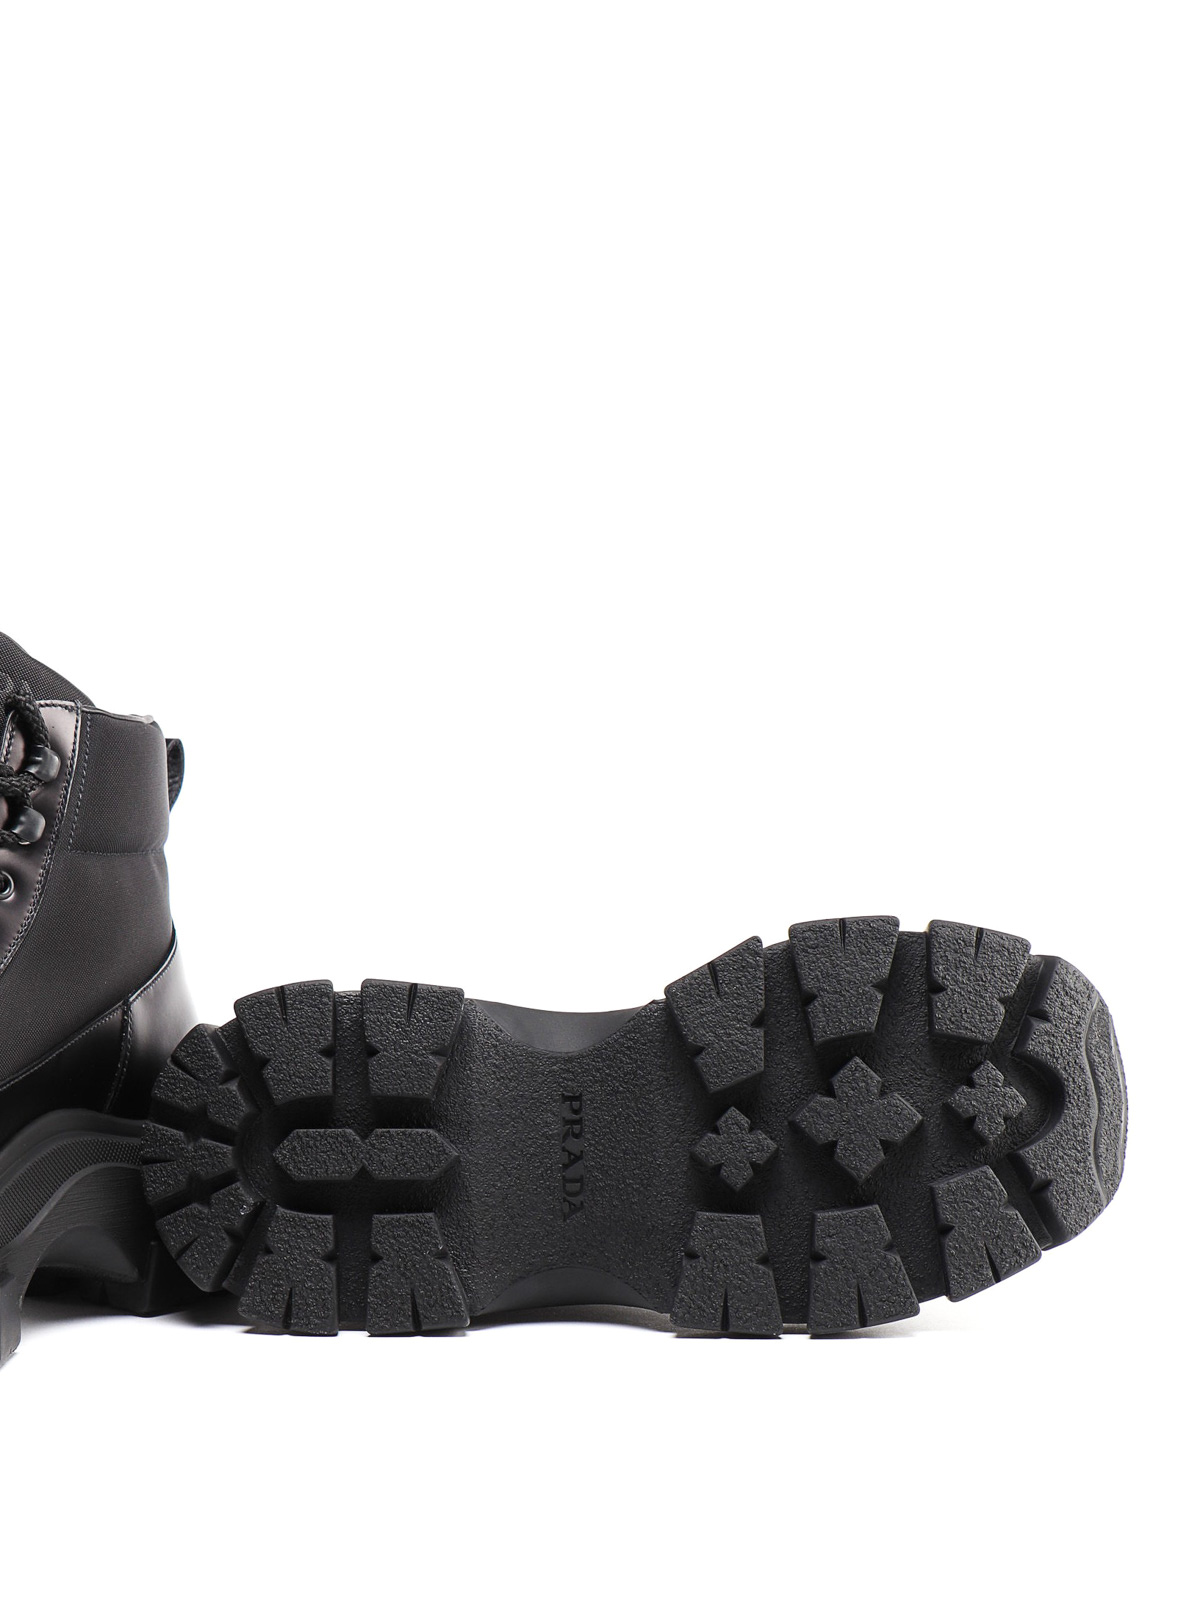 Maken Skim Bedankt Ankle boots Prada - Pegasus chunky ankle boots - 2TE1543KZP002 | iKRIX.com